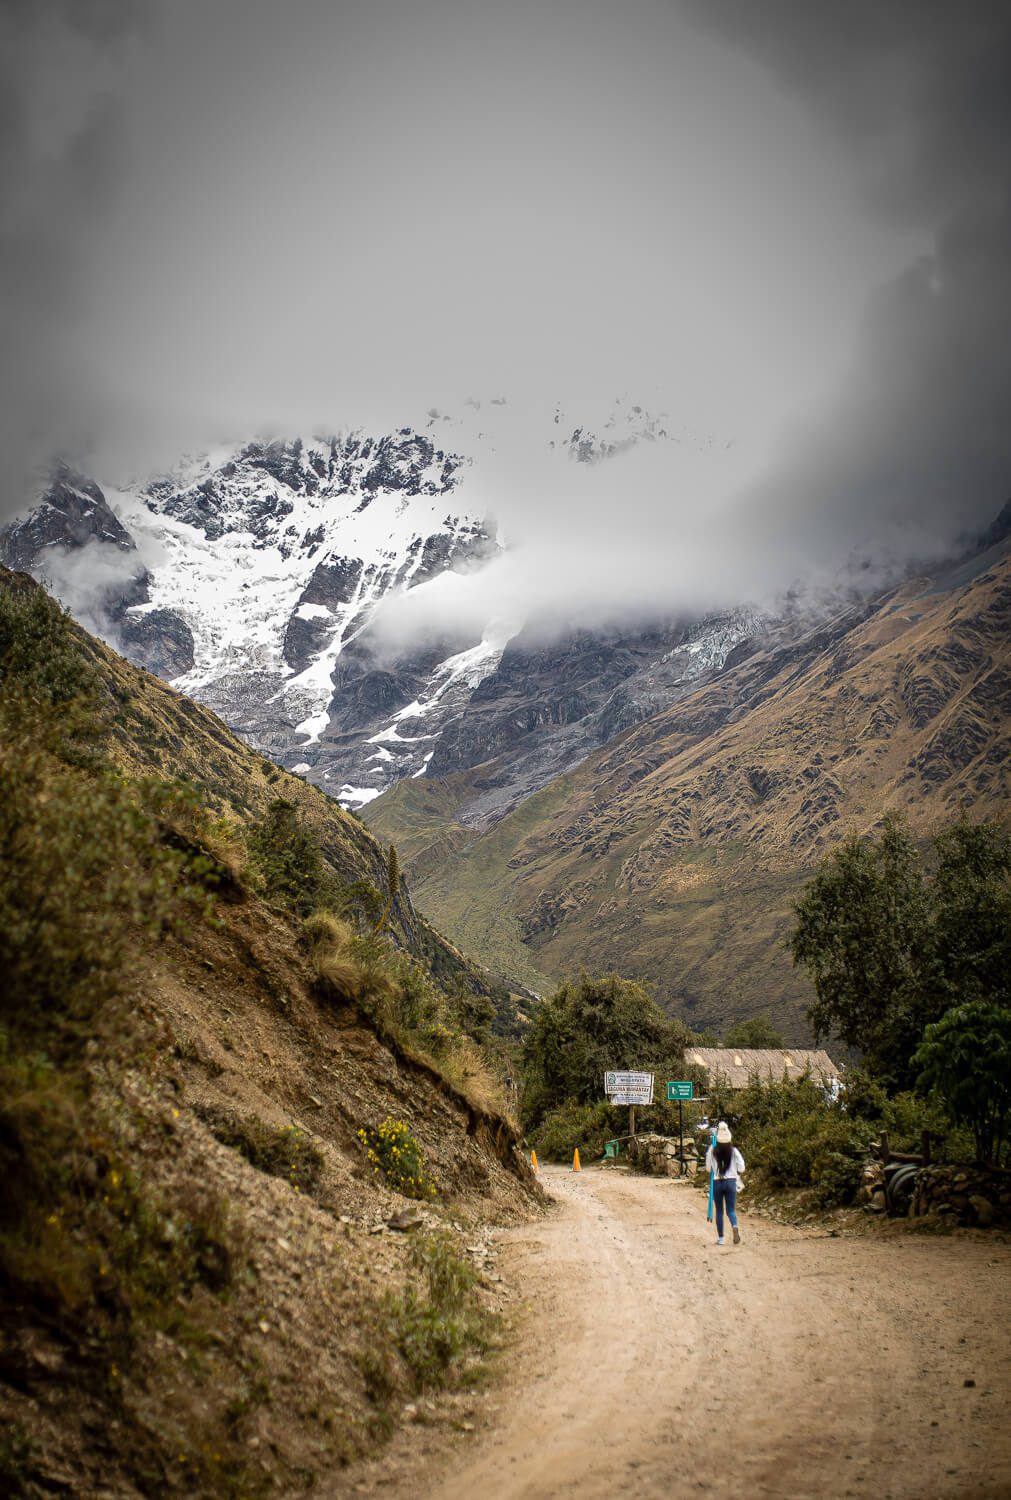 On the Salkantay Trek to Machu Picchu